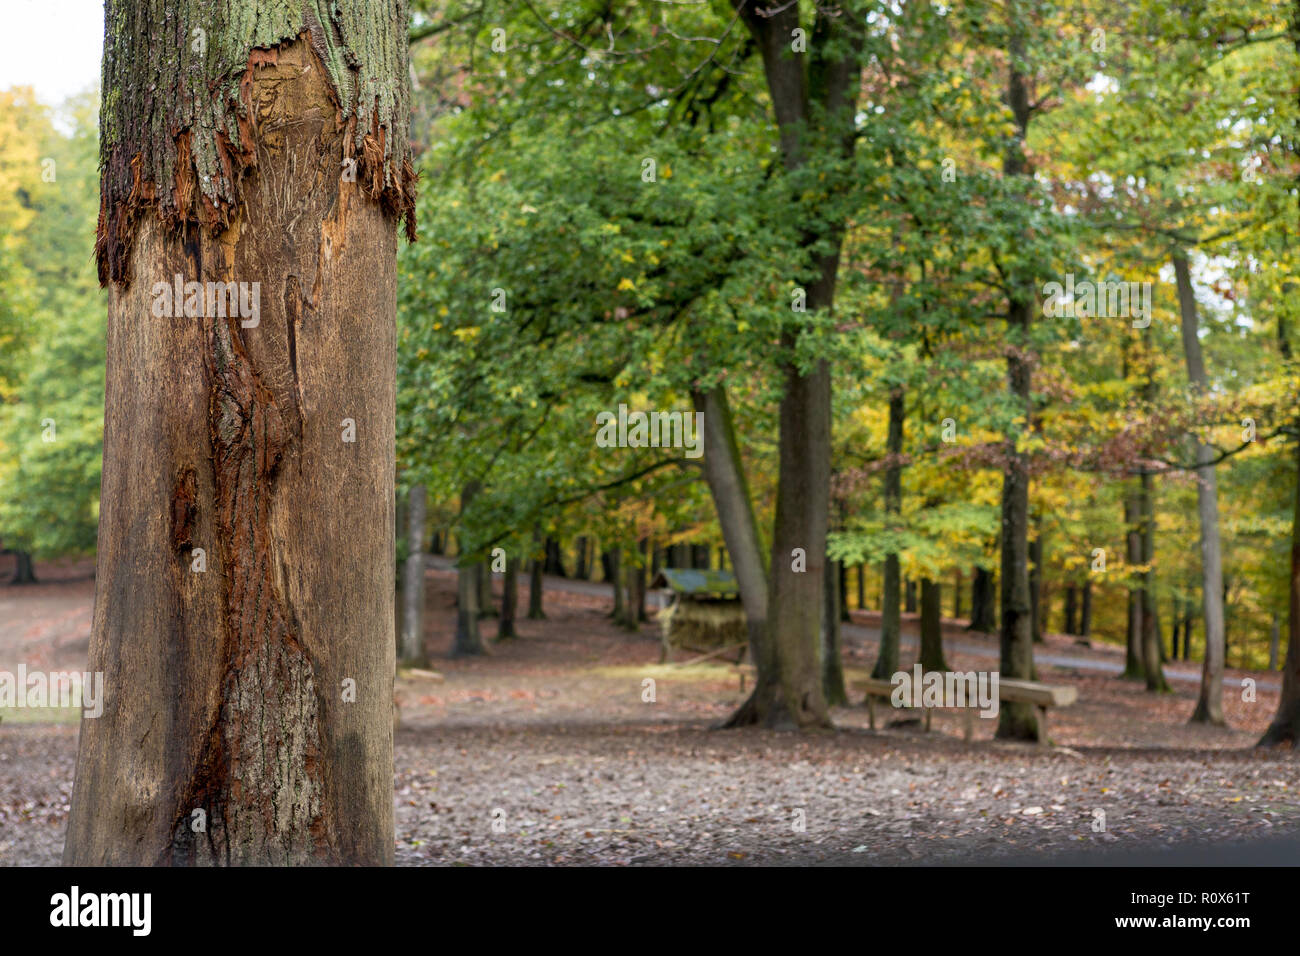 Tree bark damaged by animals at Wildlife and Adventure Park Daun, Germany Stock Photo